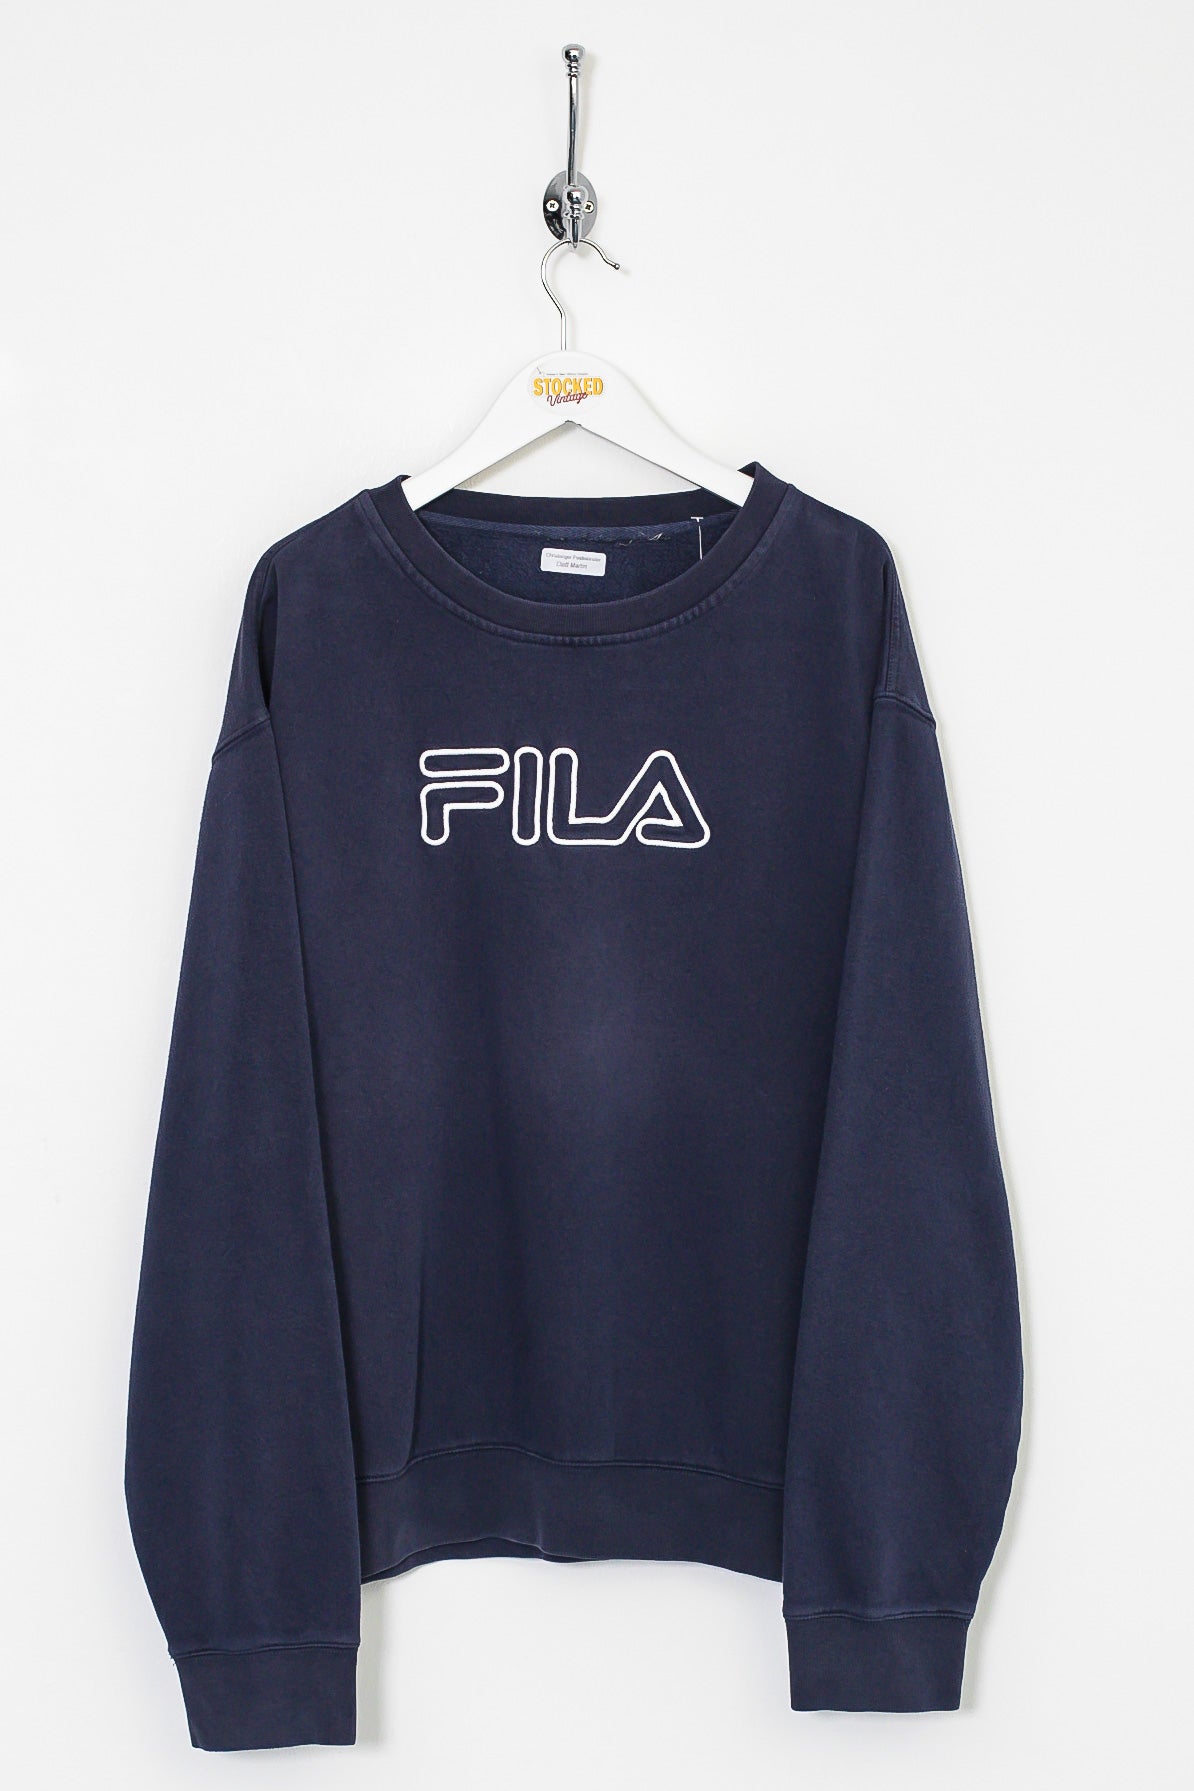 Fila Sweatshirt (M) – Stocked